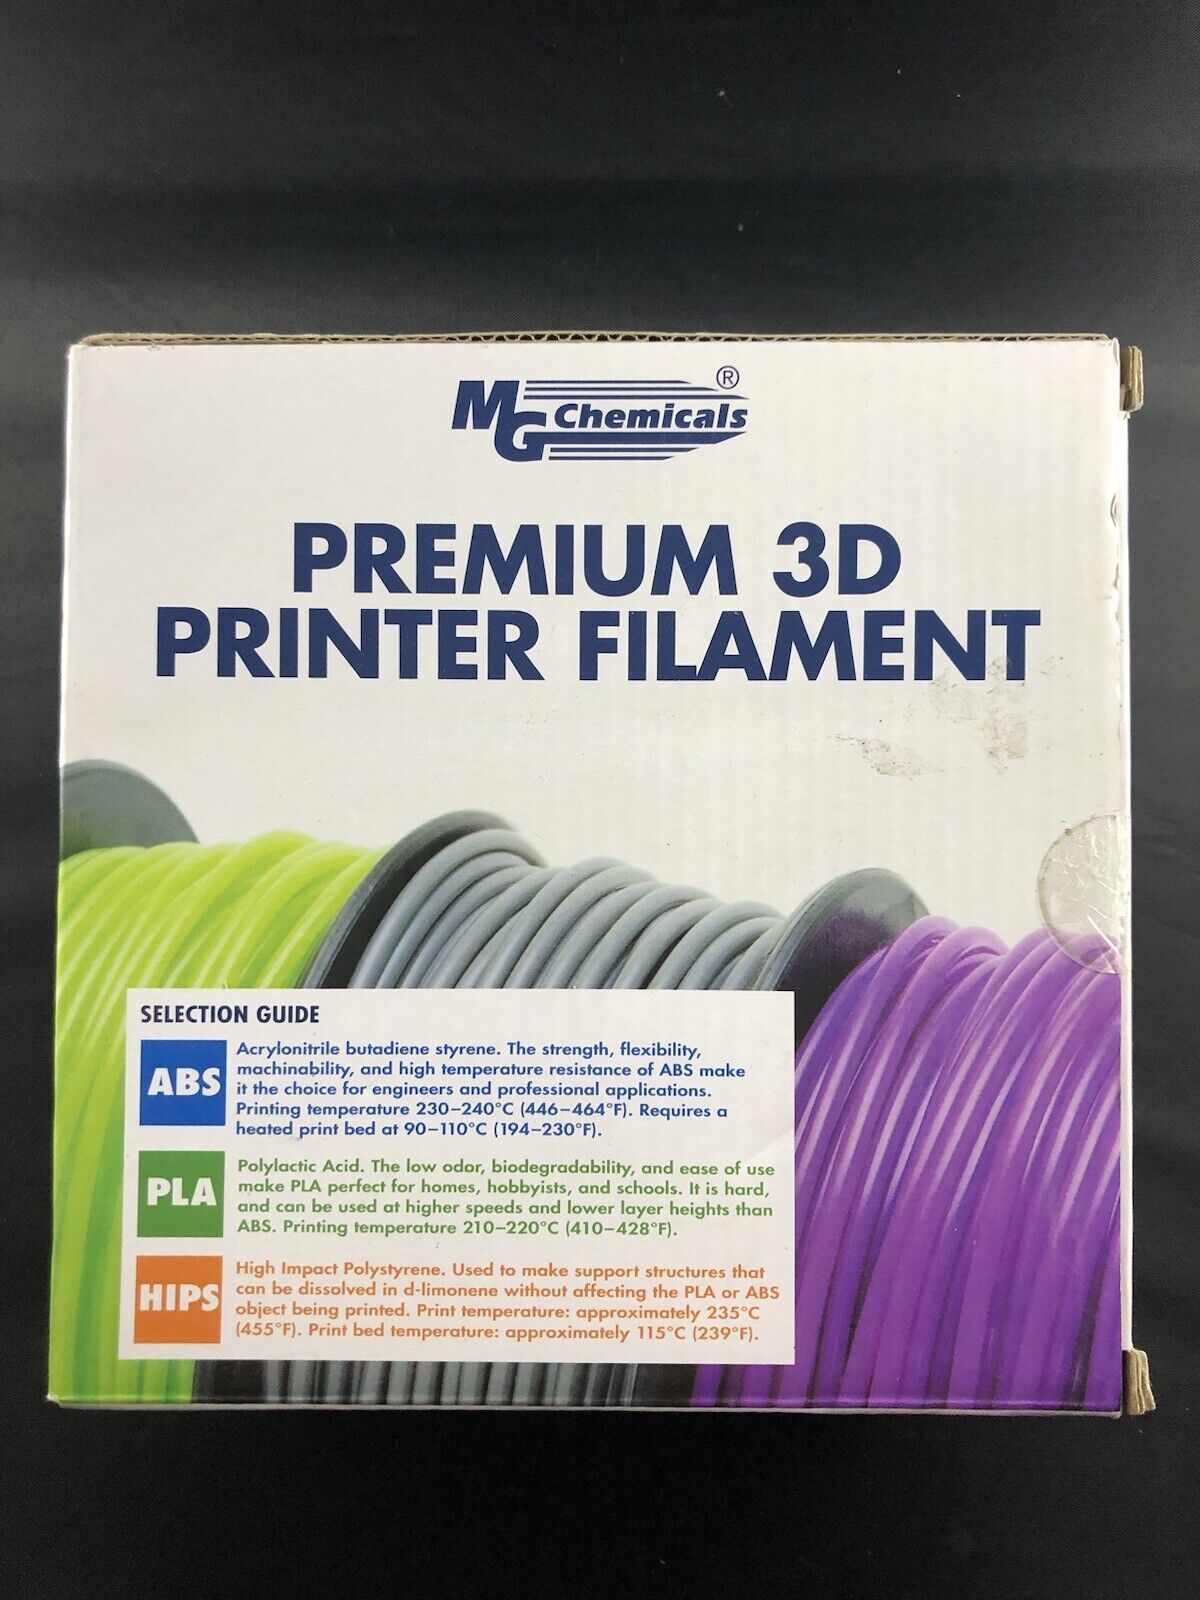 MG Chemicals Silver 1.75mm 3D Printer Premium Filament-VS.1